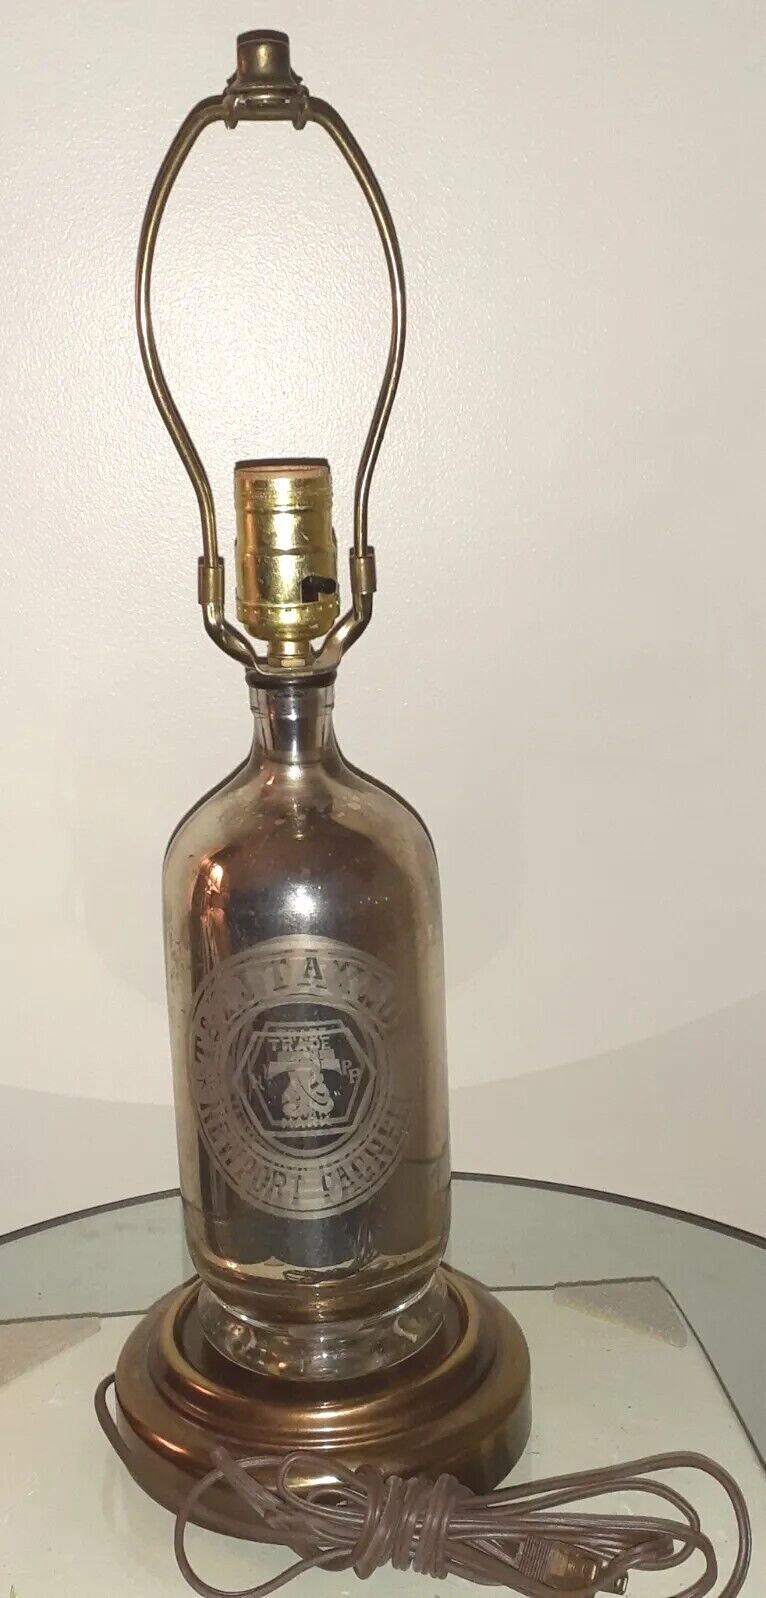 RARE Vintage Mercury Glass Electric Lamp T & FJ Taylor Newport Pagnell England